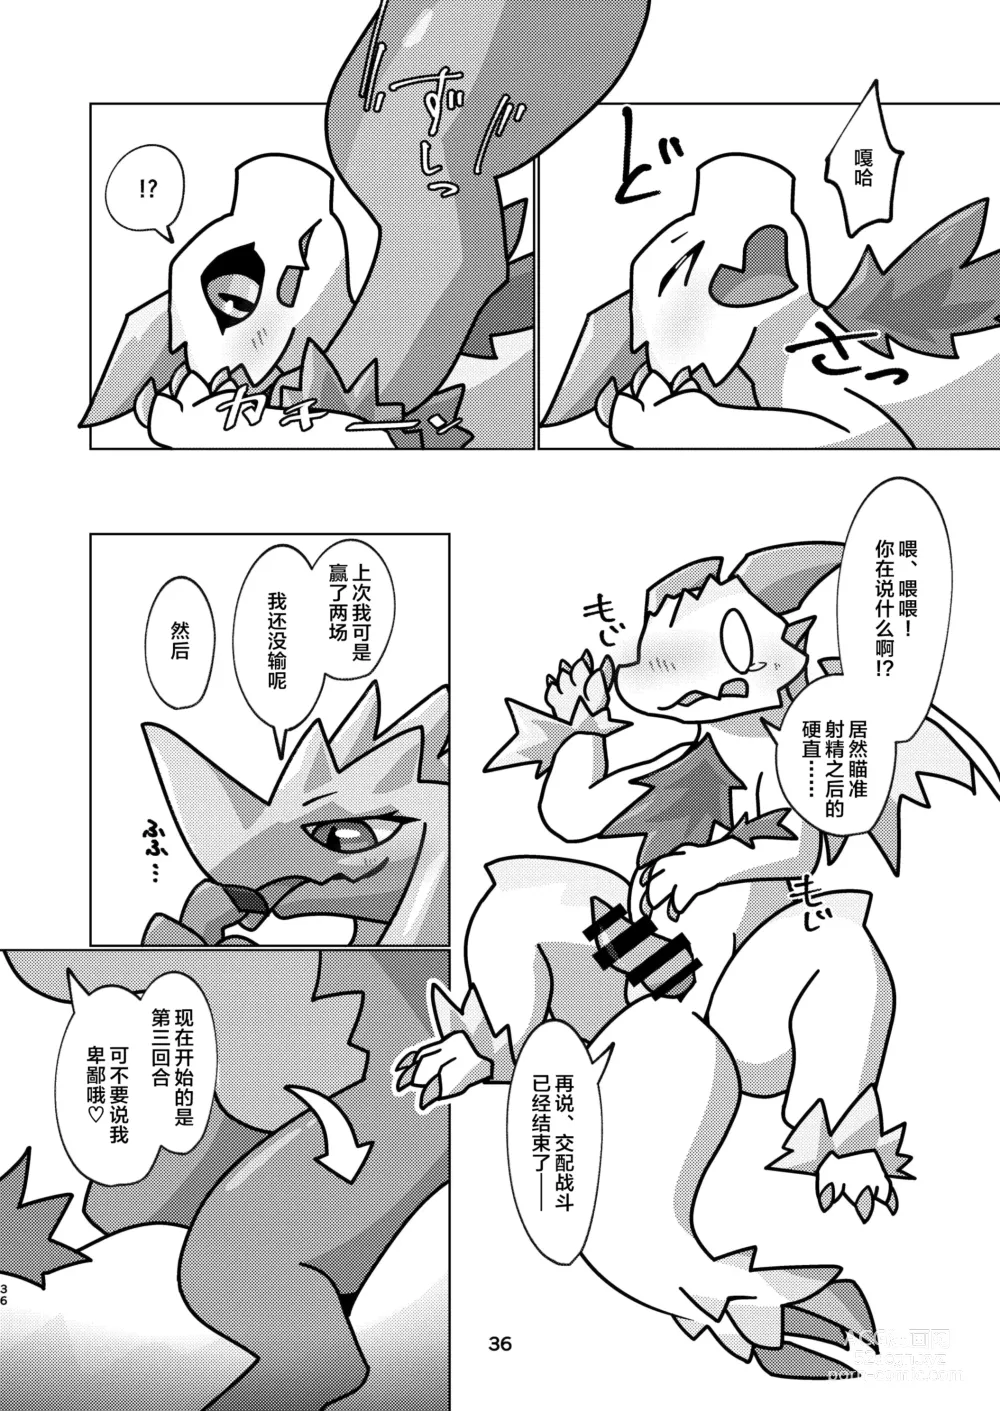 Page 36 of doujinshi 爱色冰龙的怪异克服